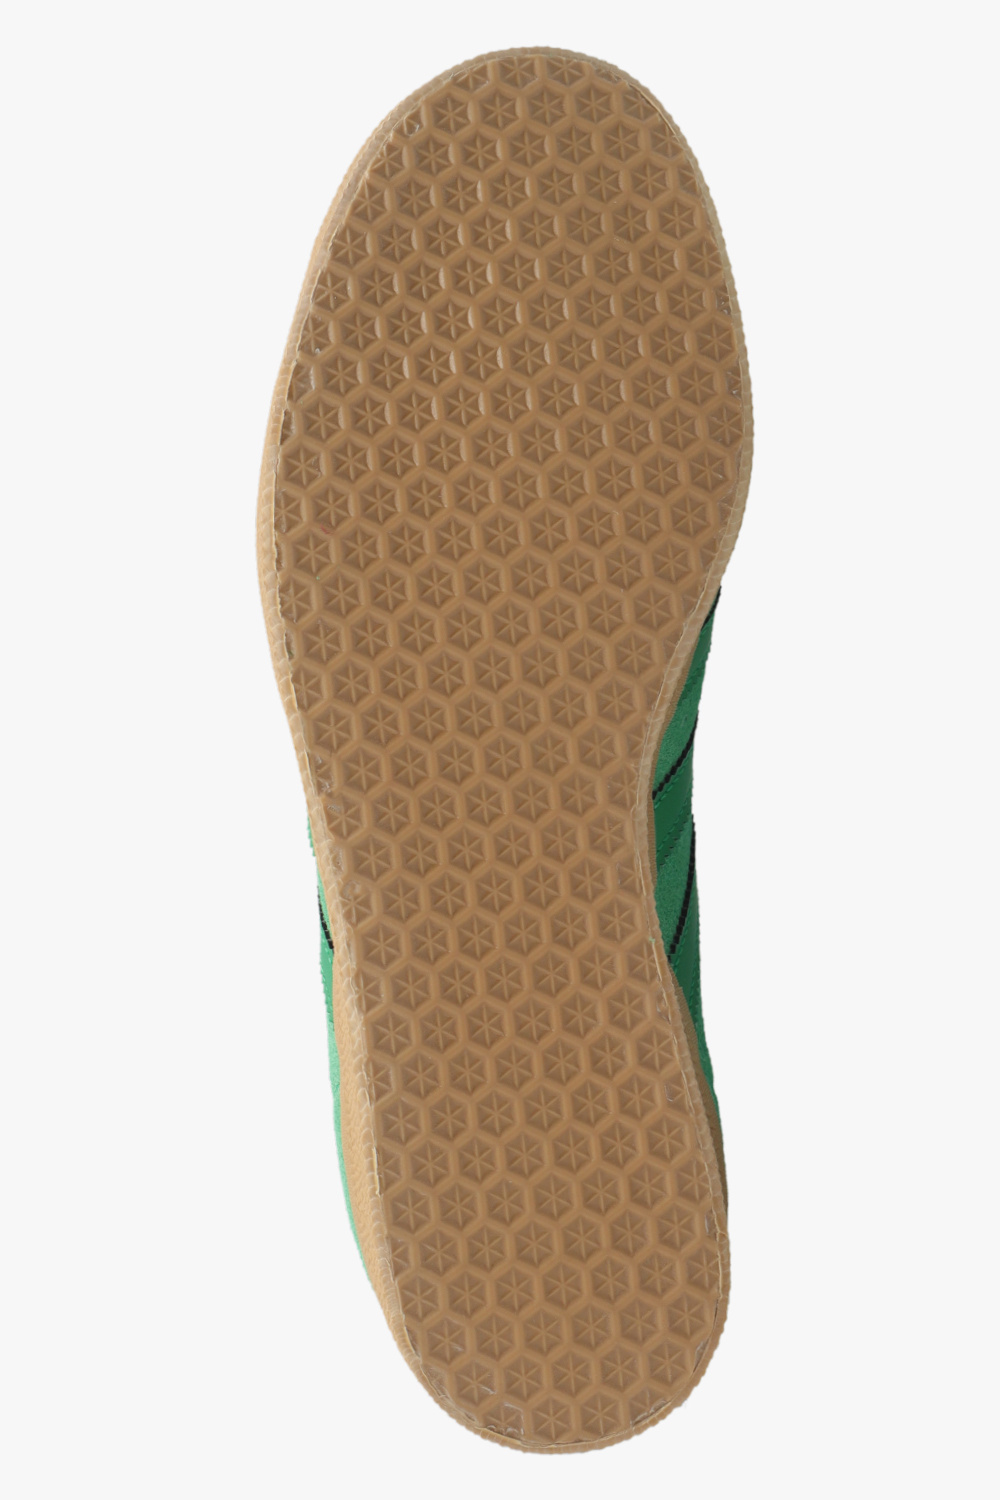 Green ‘Gazelle’ sneakers ADIDAS Originals - Vitkac Germany